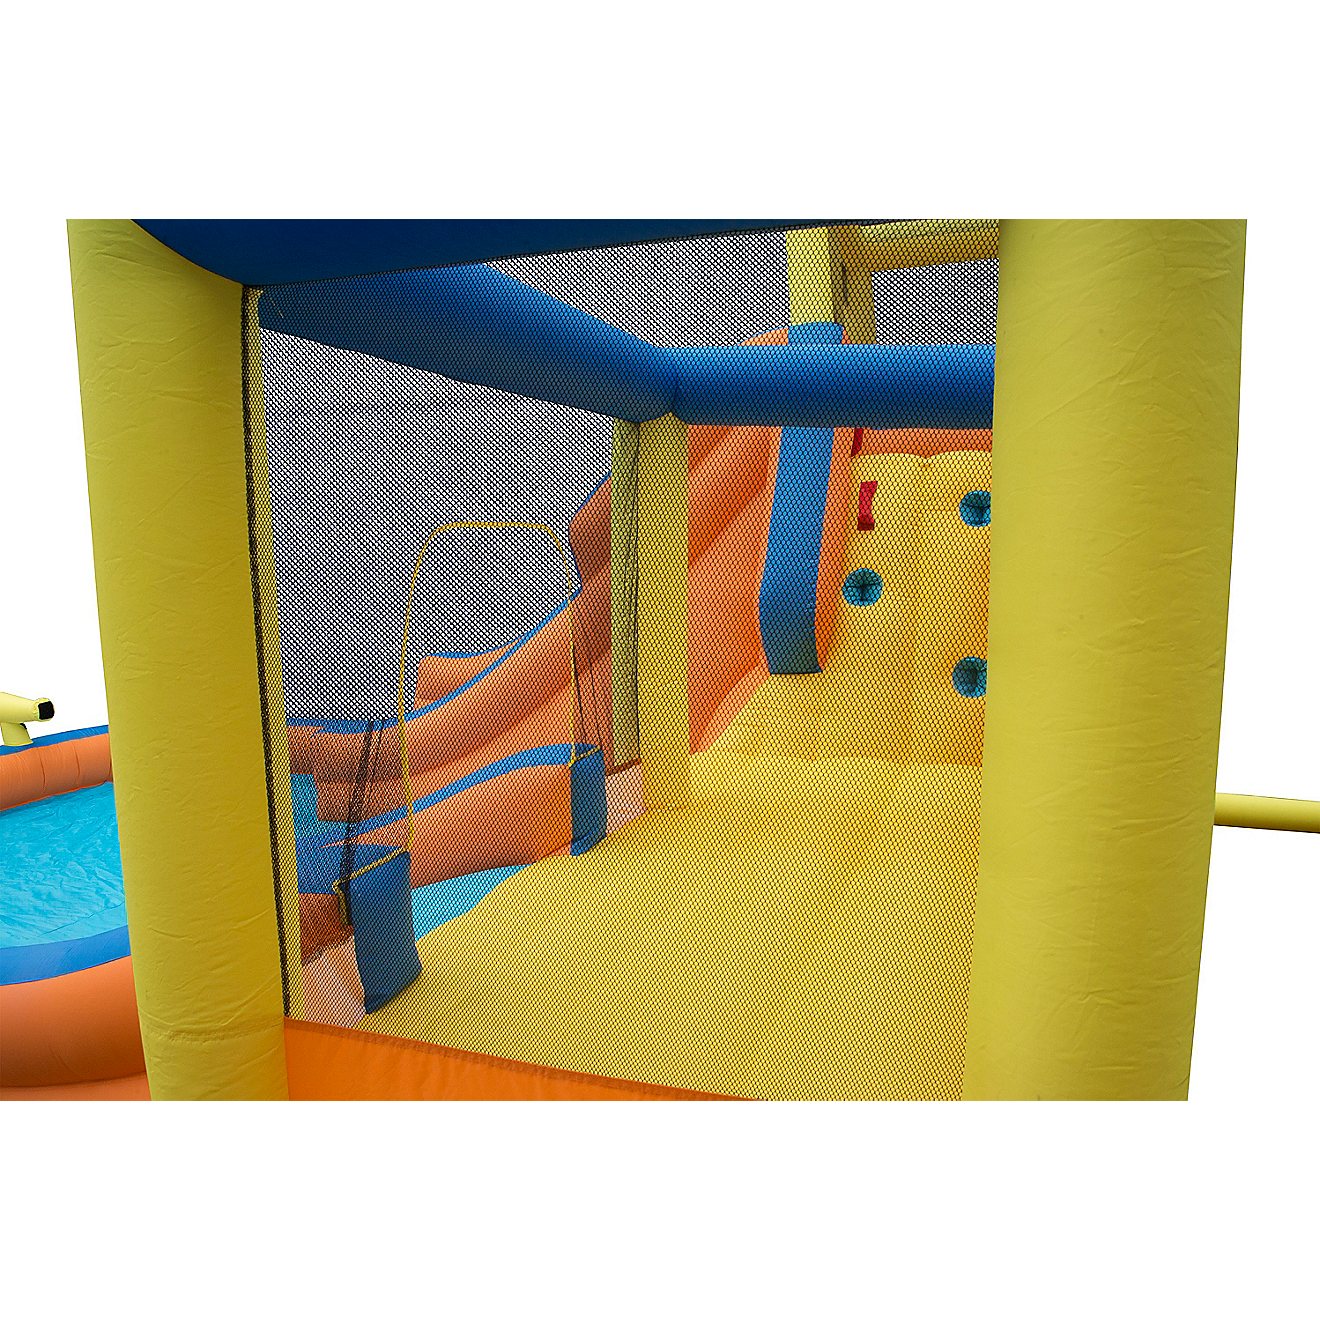 Banzai Slide 'N Bounce 6-Person Splash Park                                                                                      - view number 5